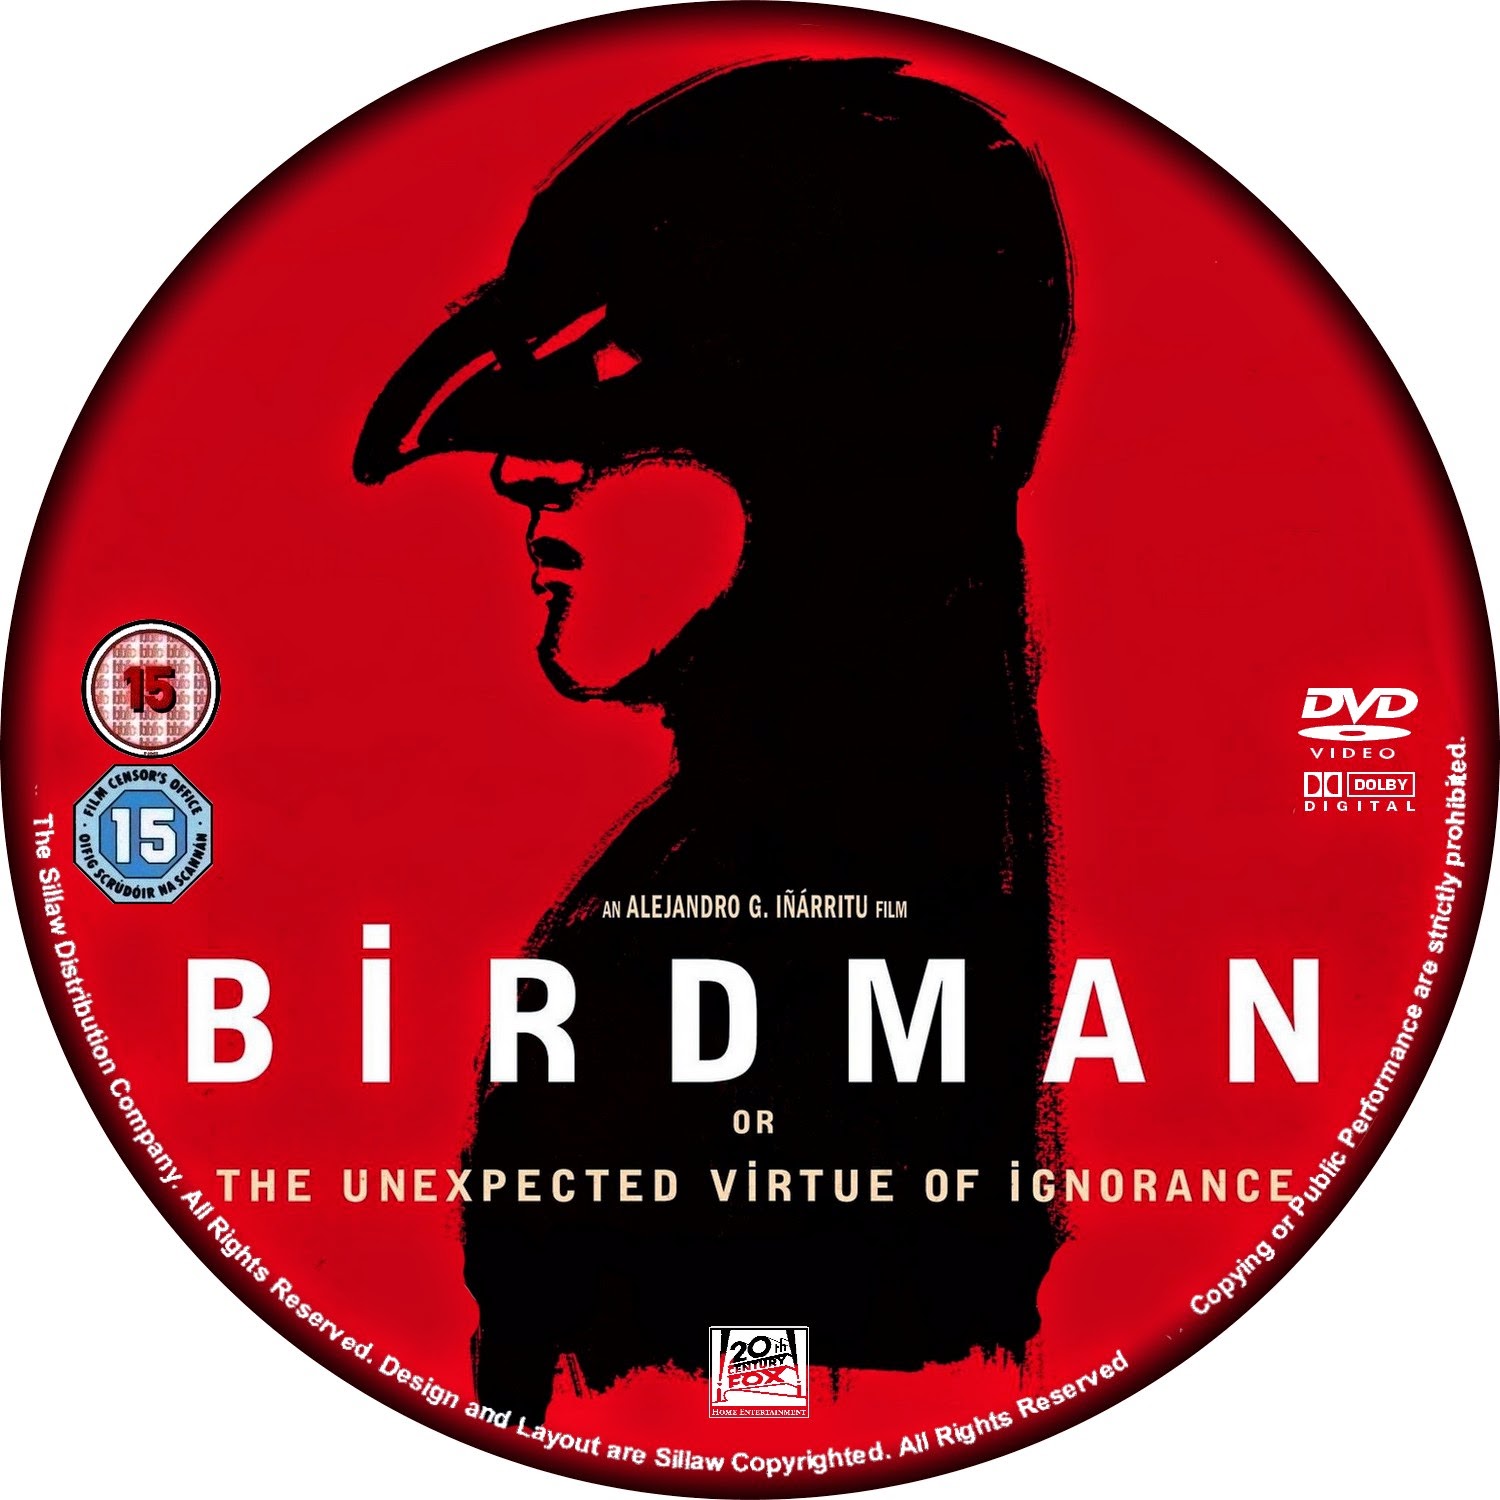 Birdman (2014) - DVD Label Cover Movie